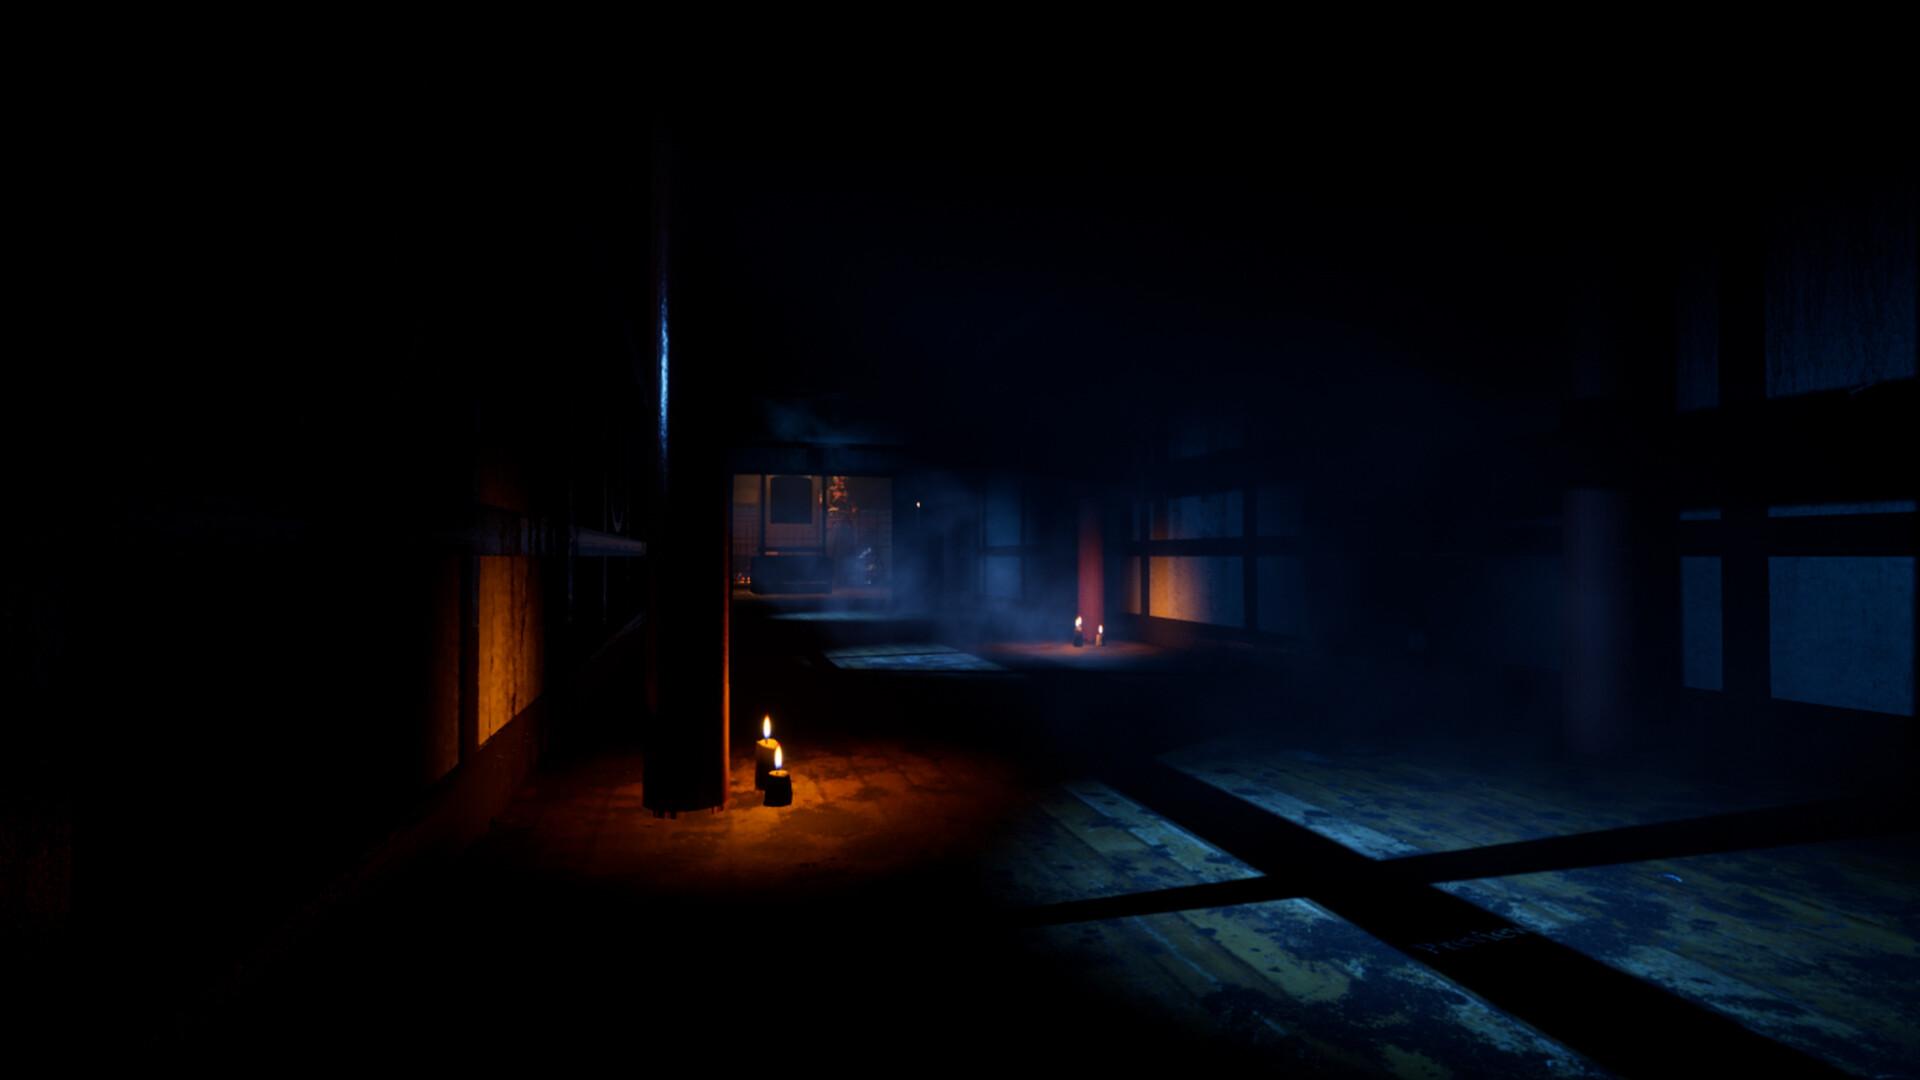 Screenshot №19 from game Malice